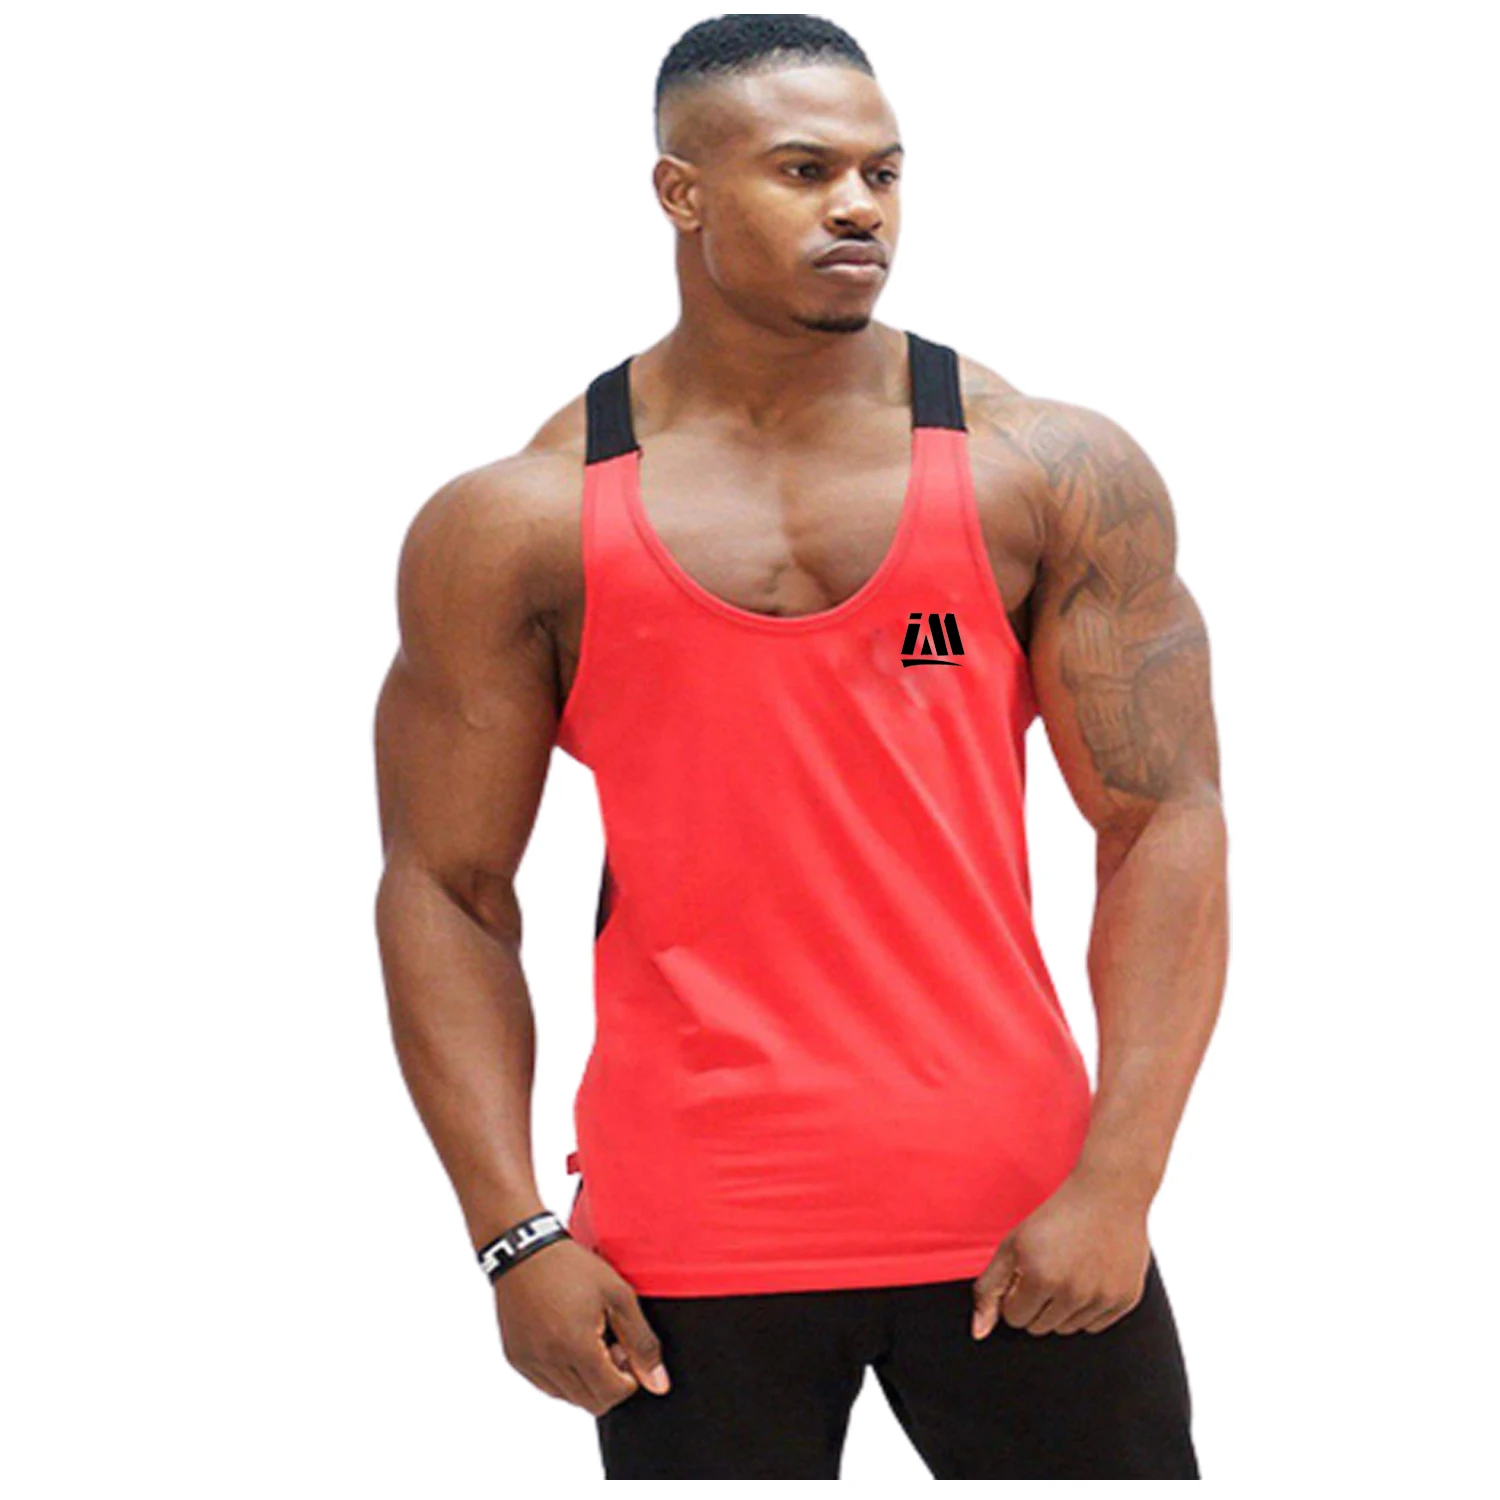 PIMD Box Male Vest Red/ Black Gym Stringer Muscle Mens S M L XL 